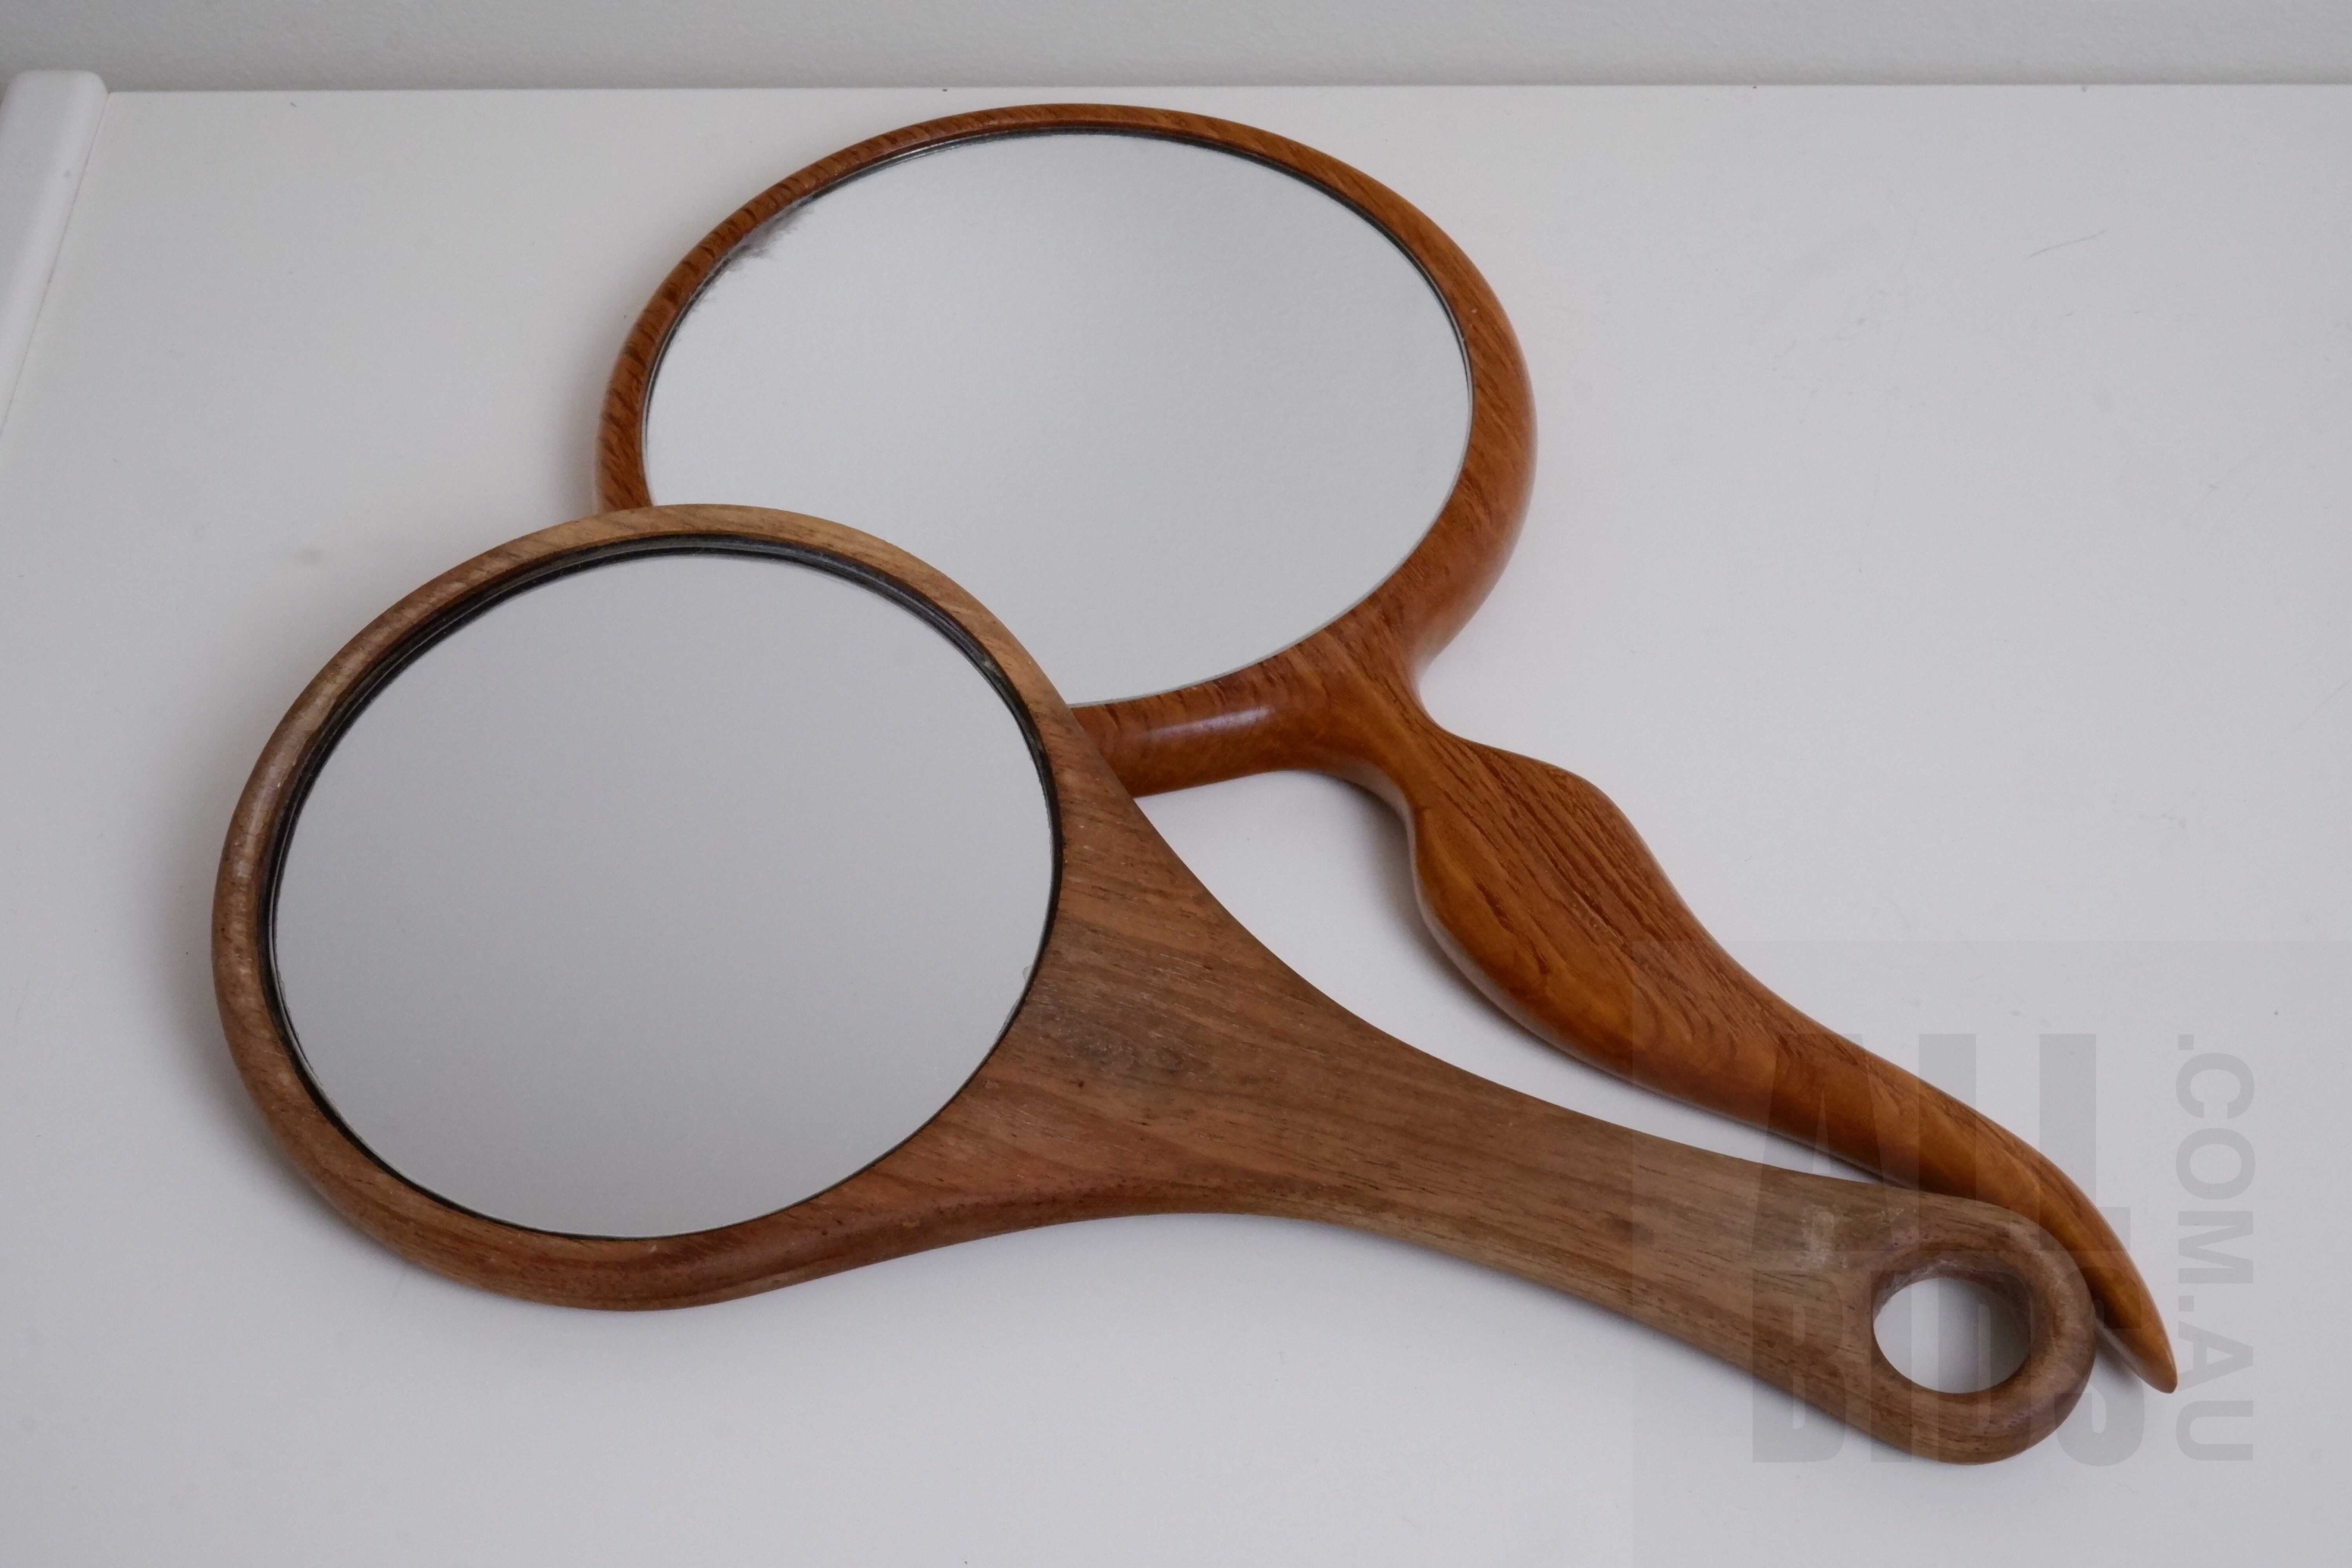 'Two Bespoke Carved Australian Hardwood Mirrors'